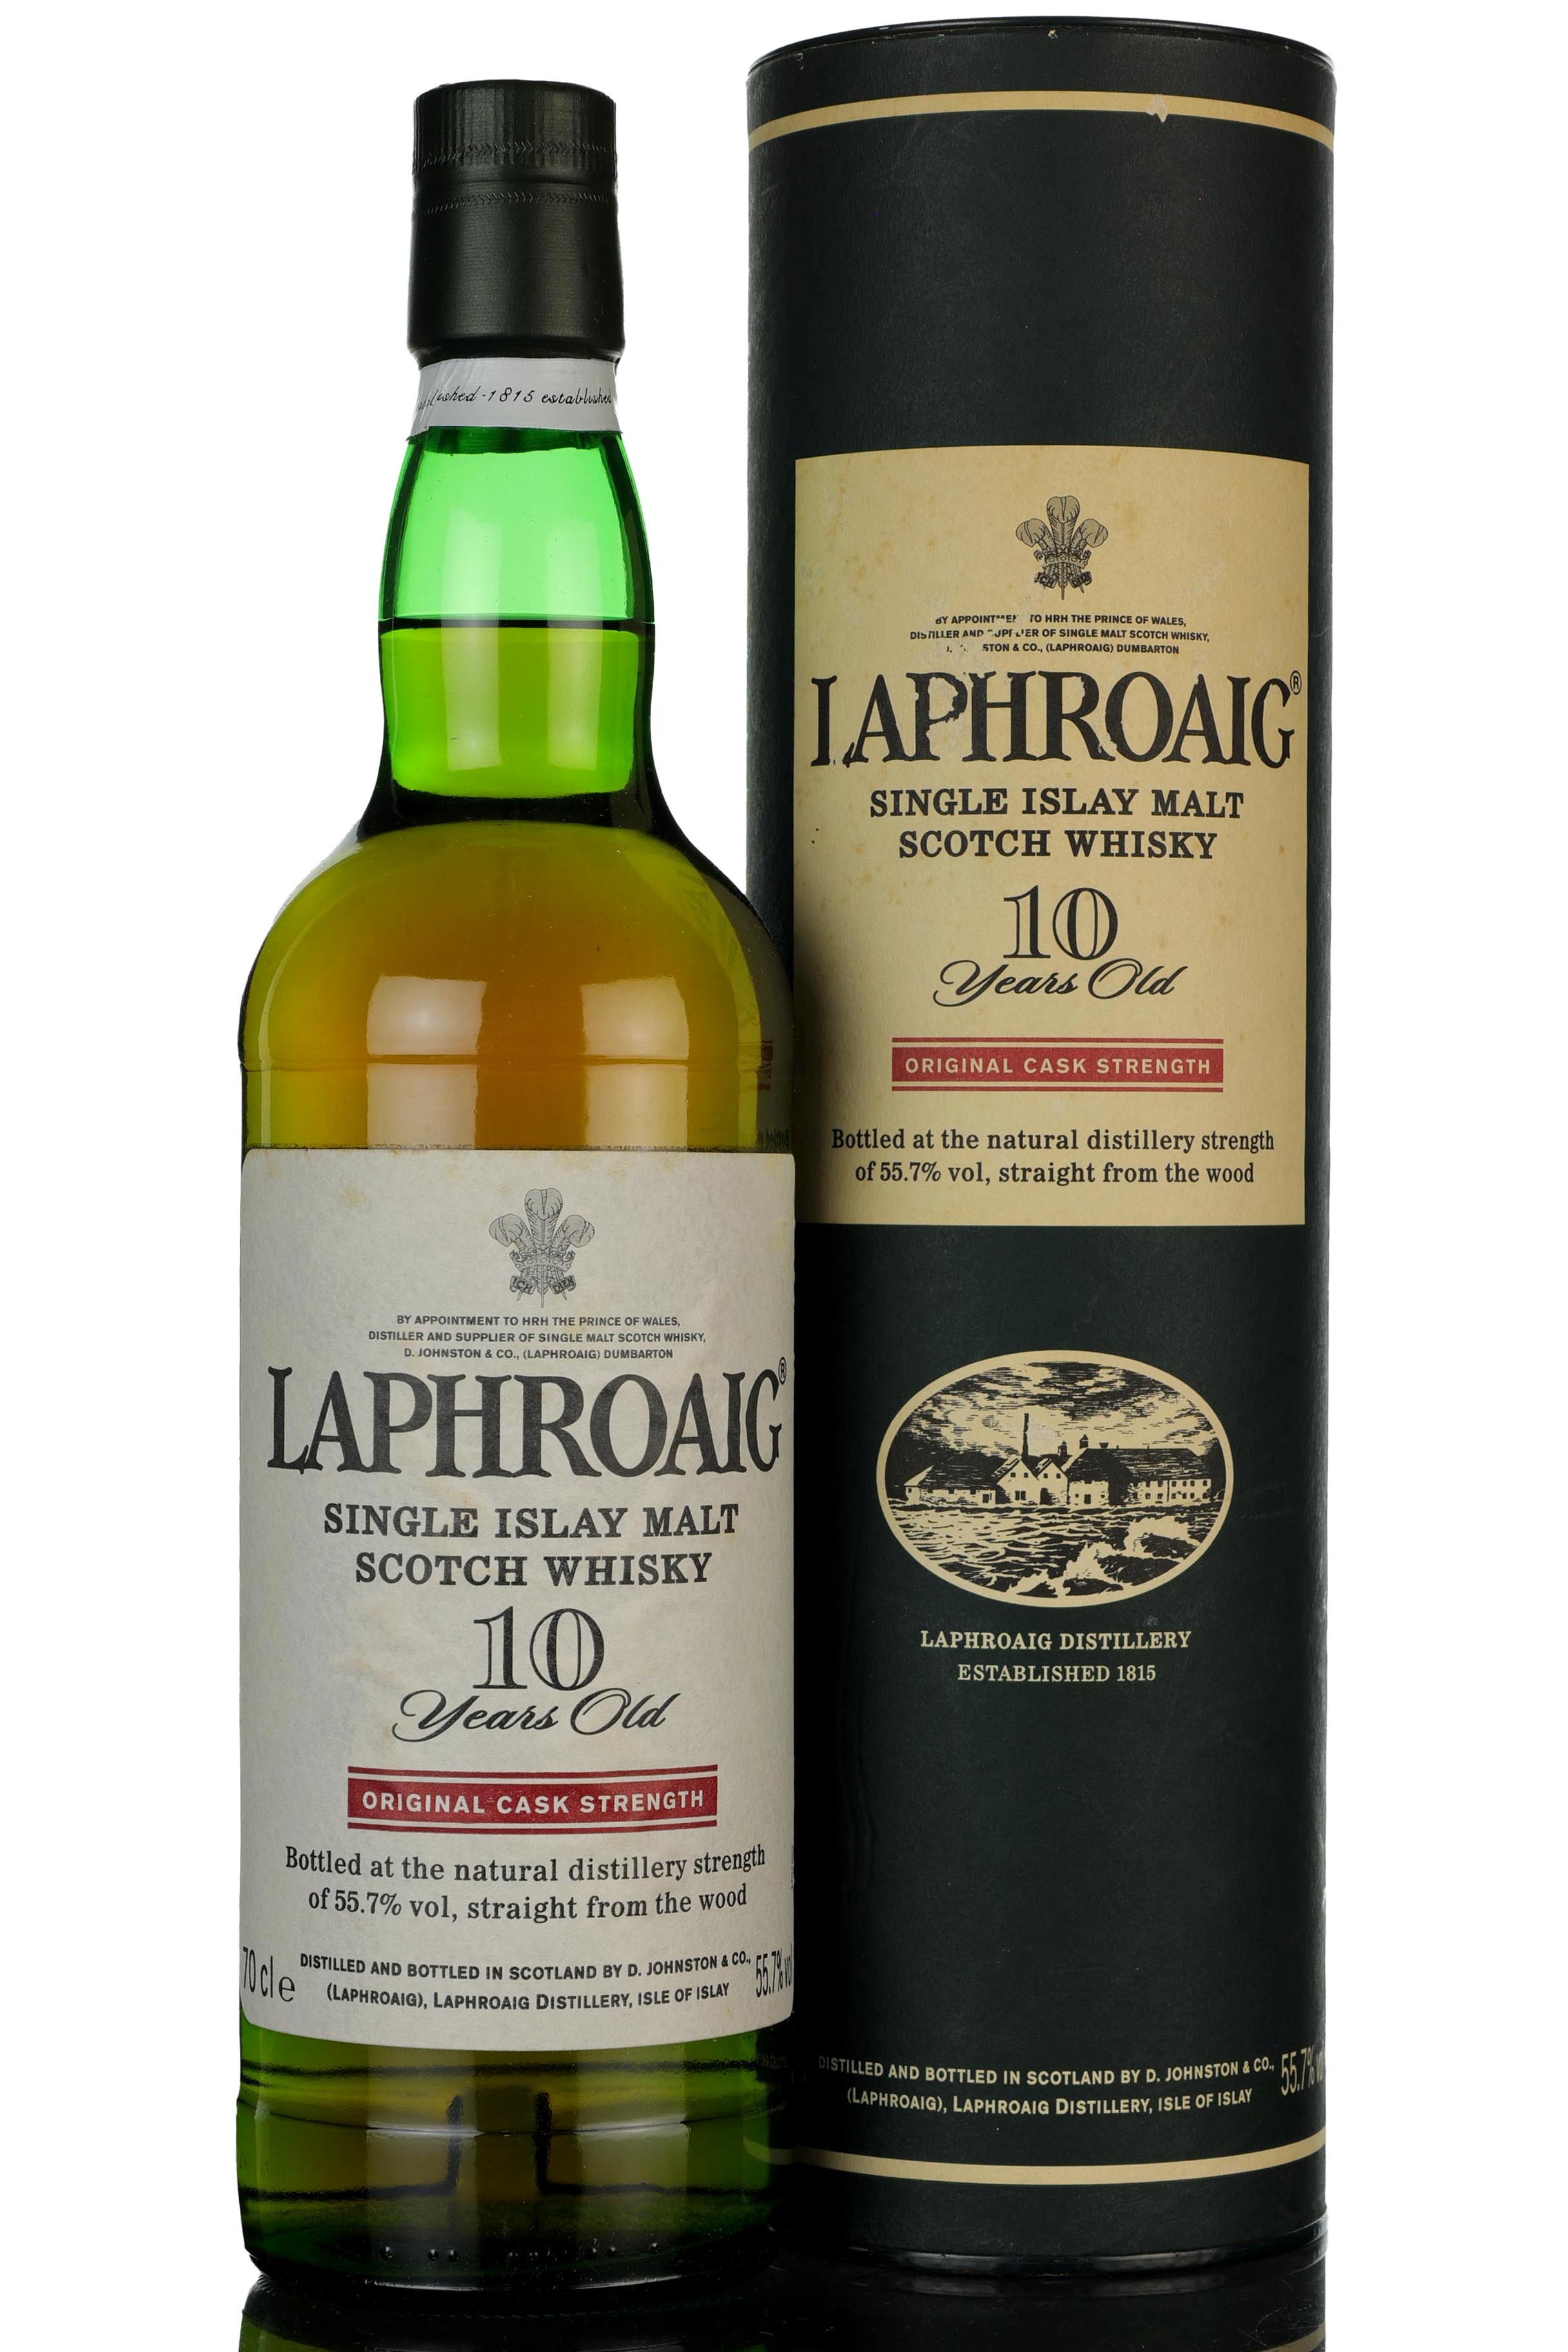 Laphroaig 10 Year Old - Original Cask Strength 55.7% - Mid 2000s